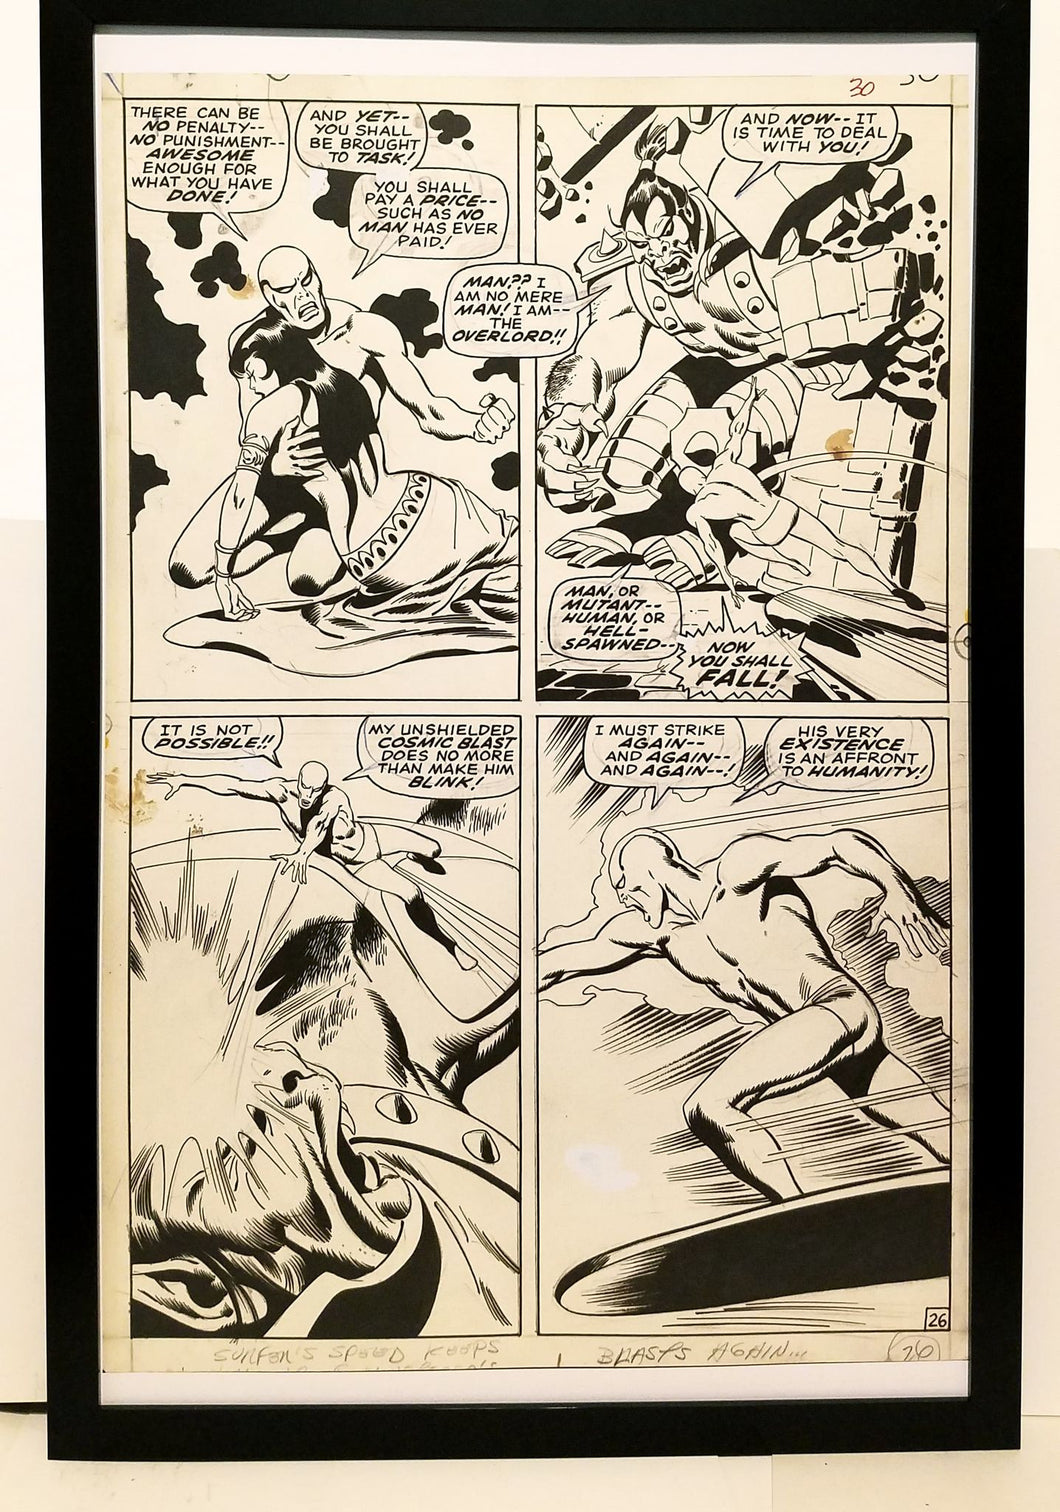 Silver Surfer #6 pg. 26 by John & Sal Buscema 11x17 FRAMED Original Art Poster Marvel Comics